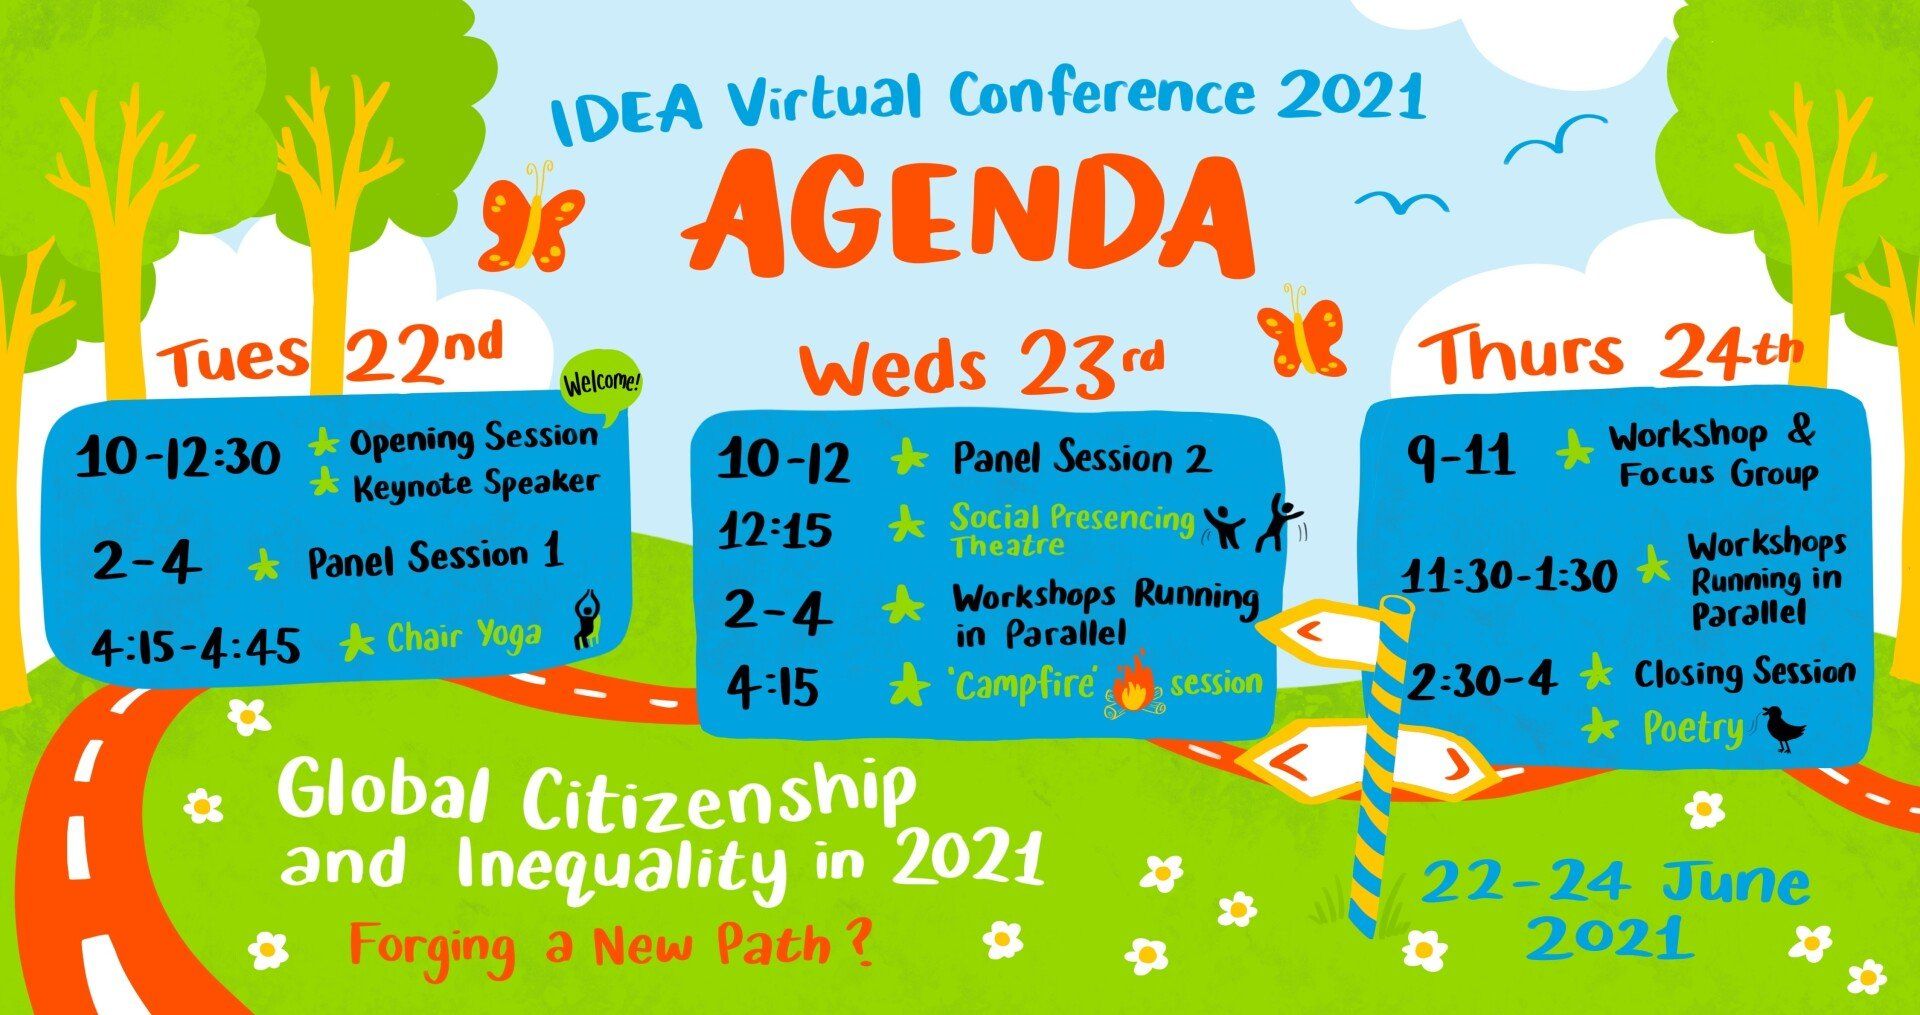 IDEA Conference Visual Conference poster